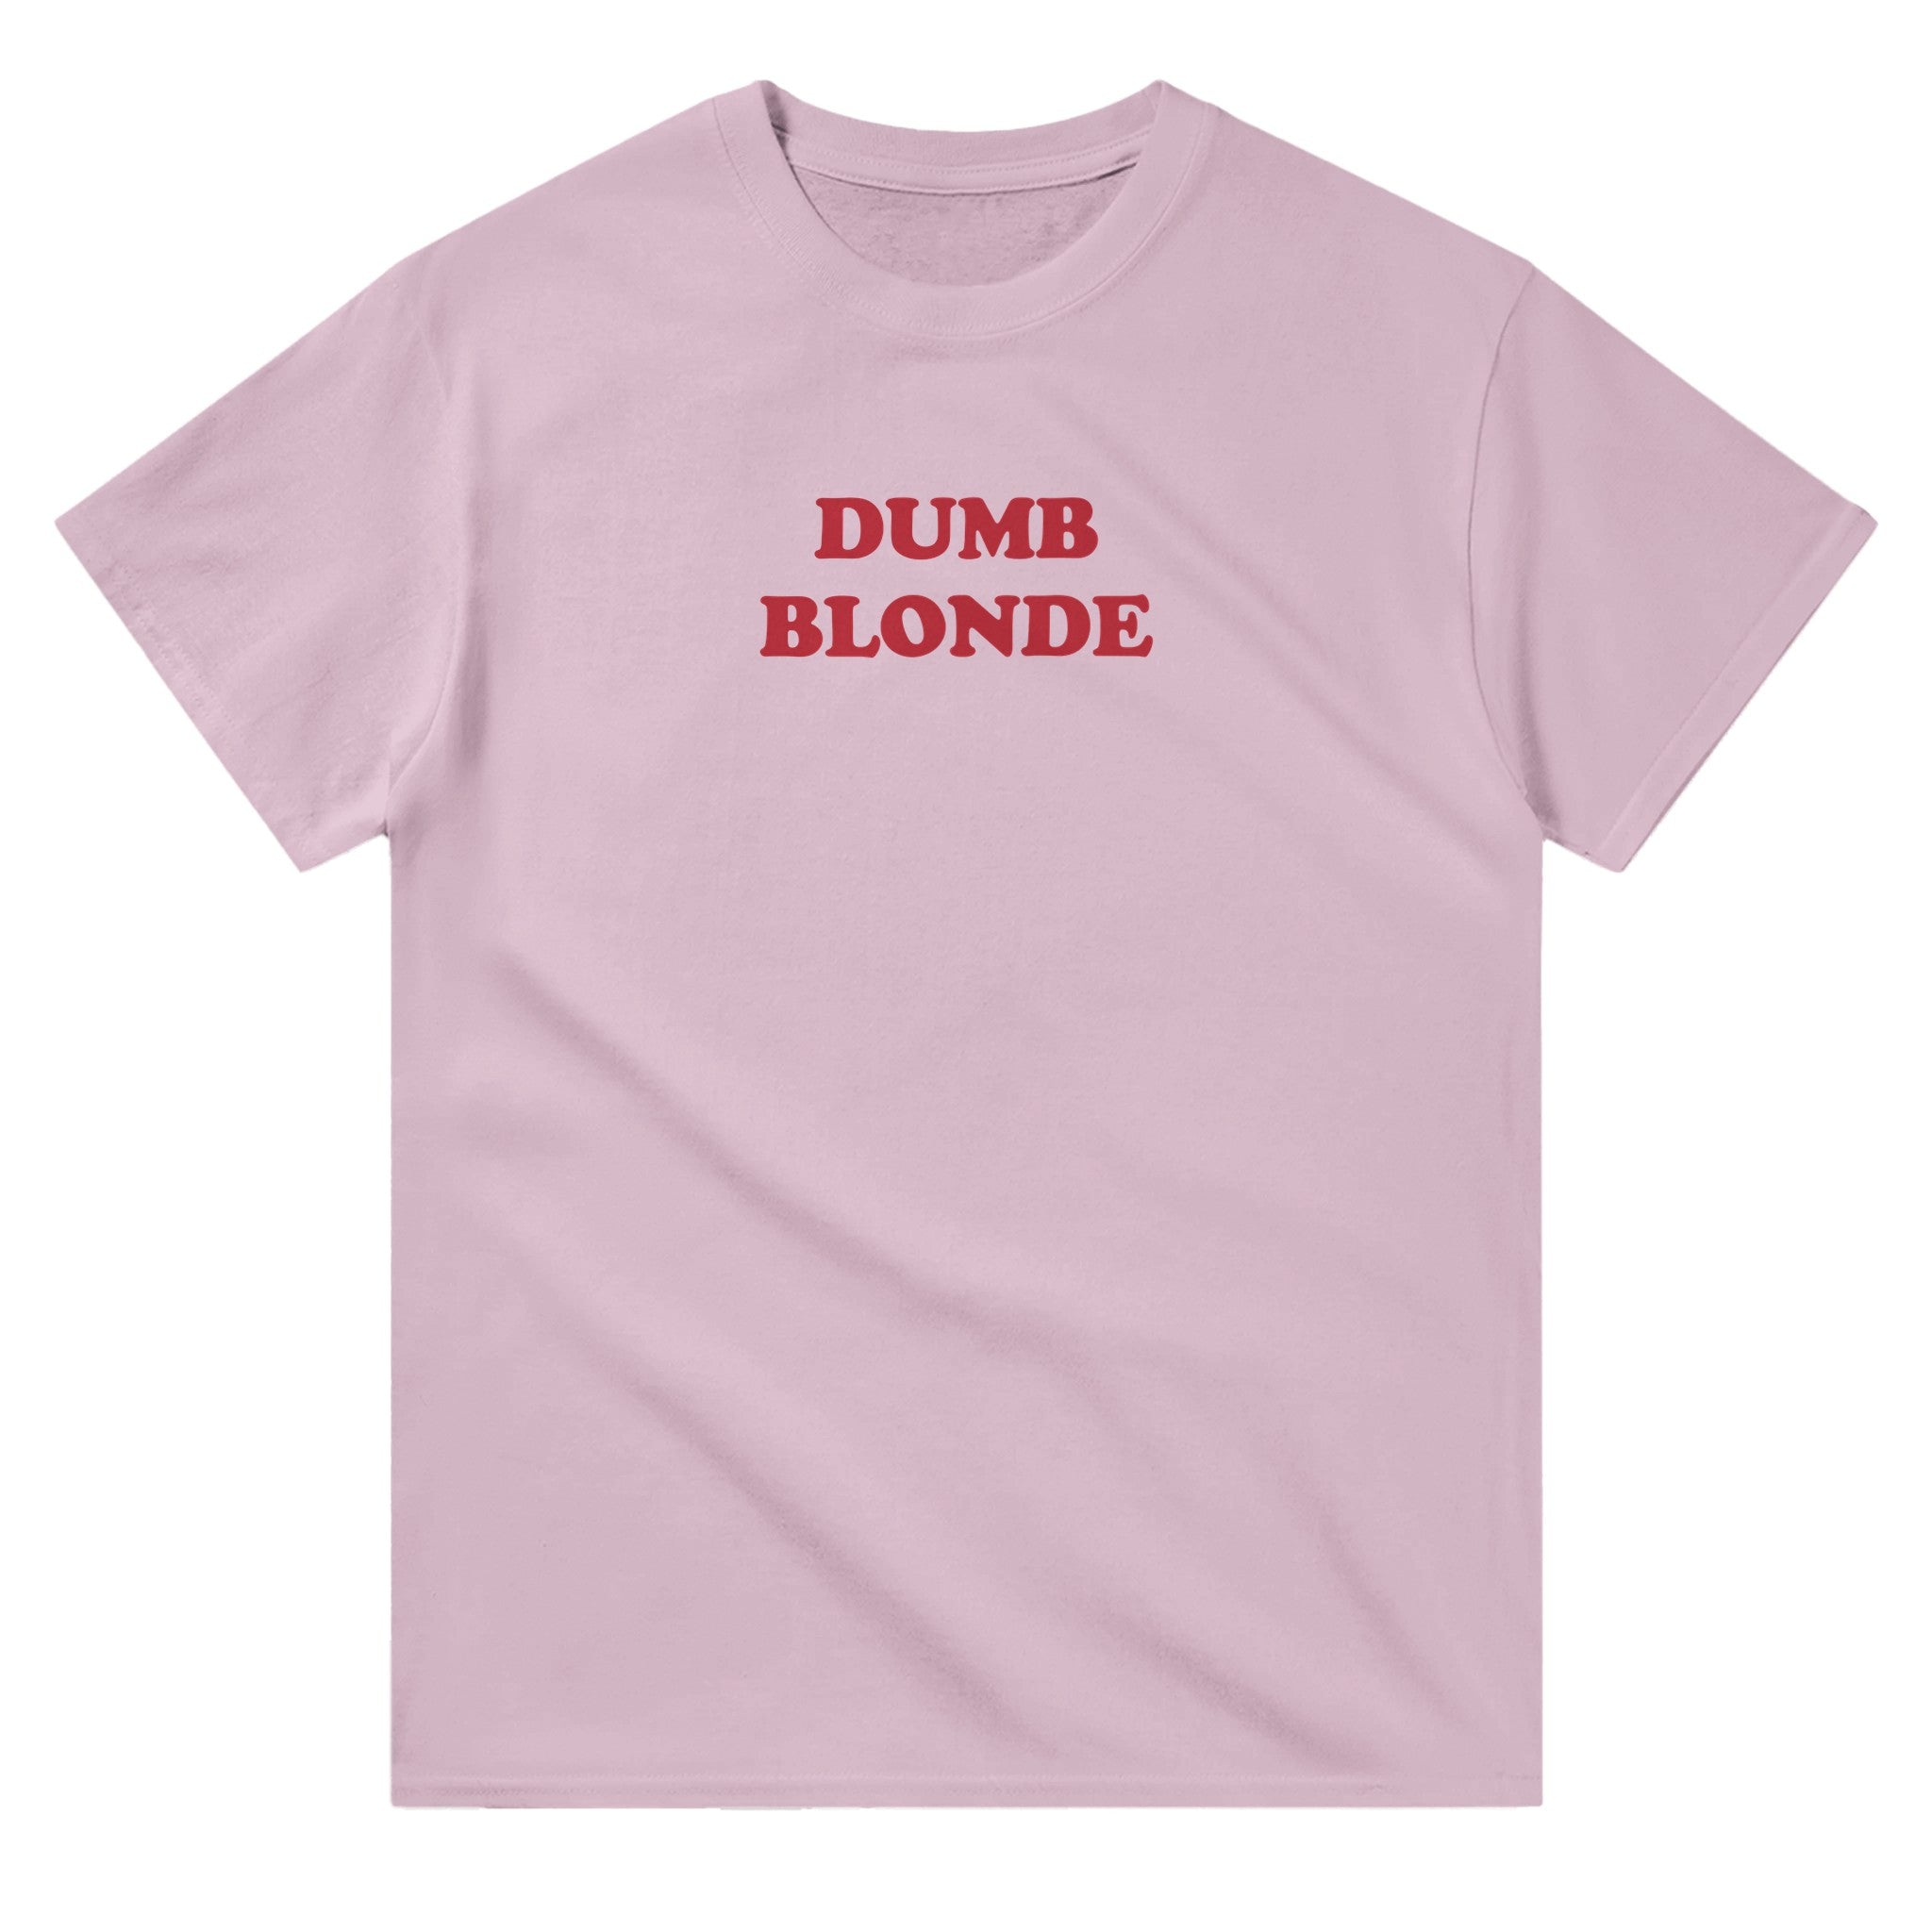 'Dumb Blonde' classic tee - In Print We Trust